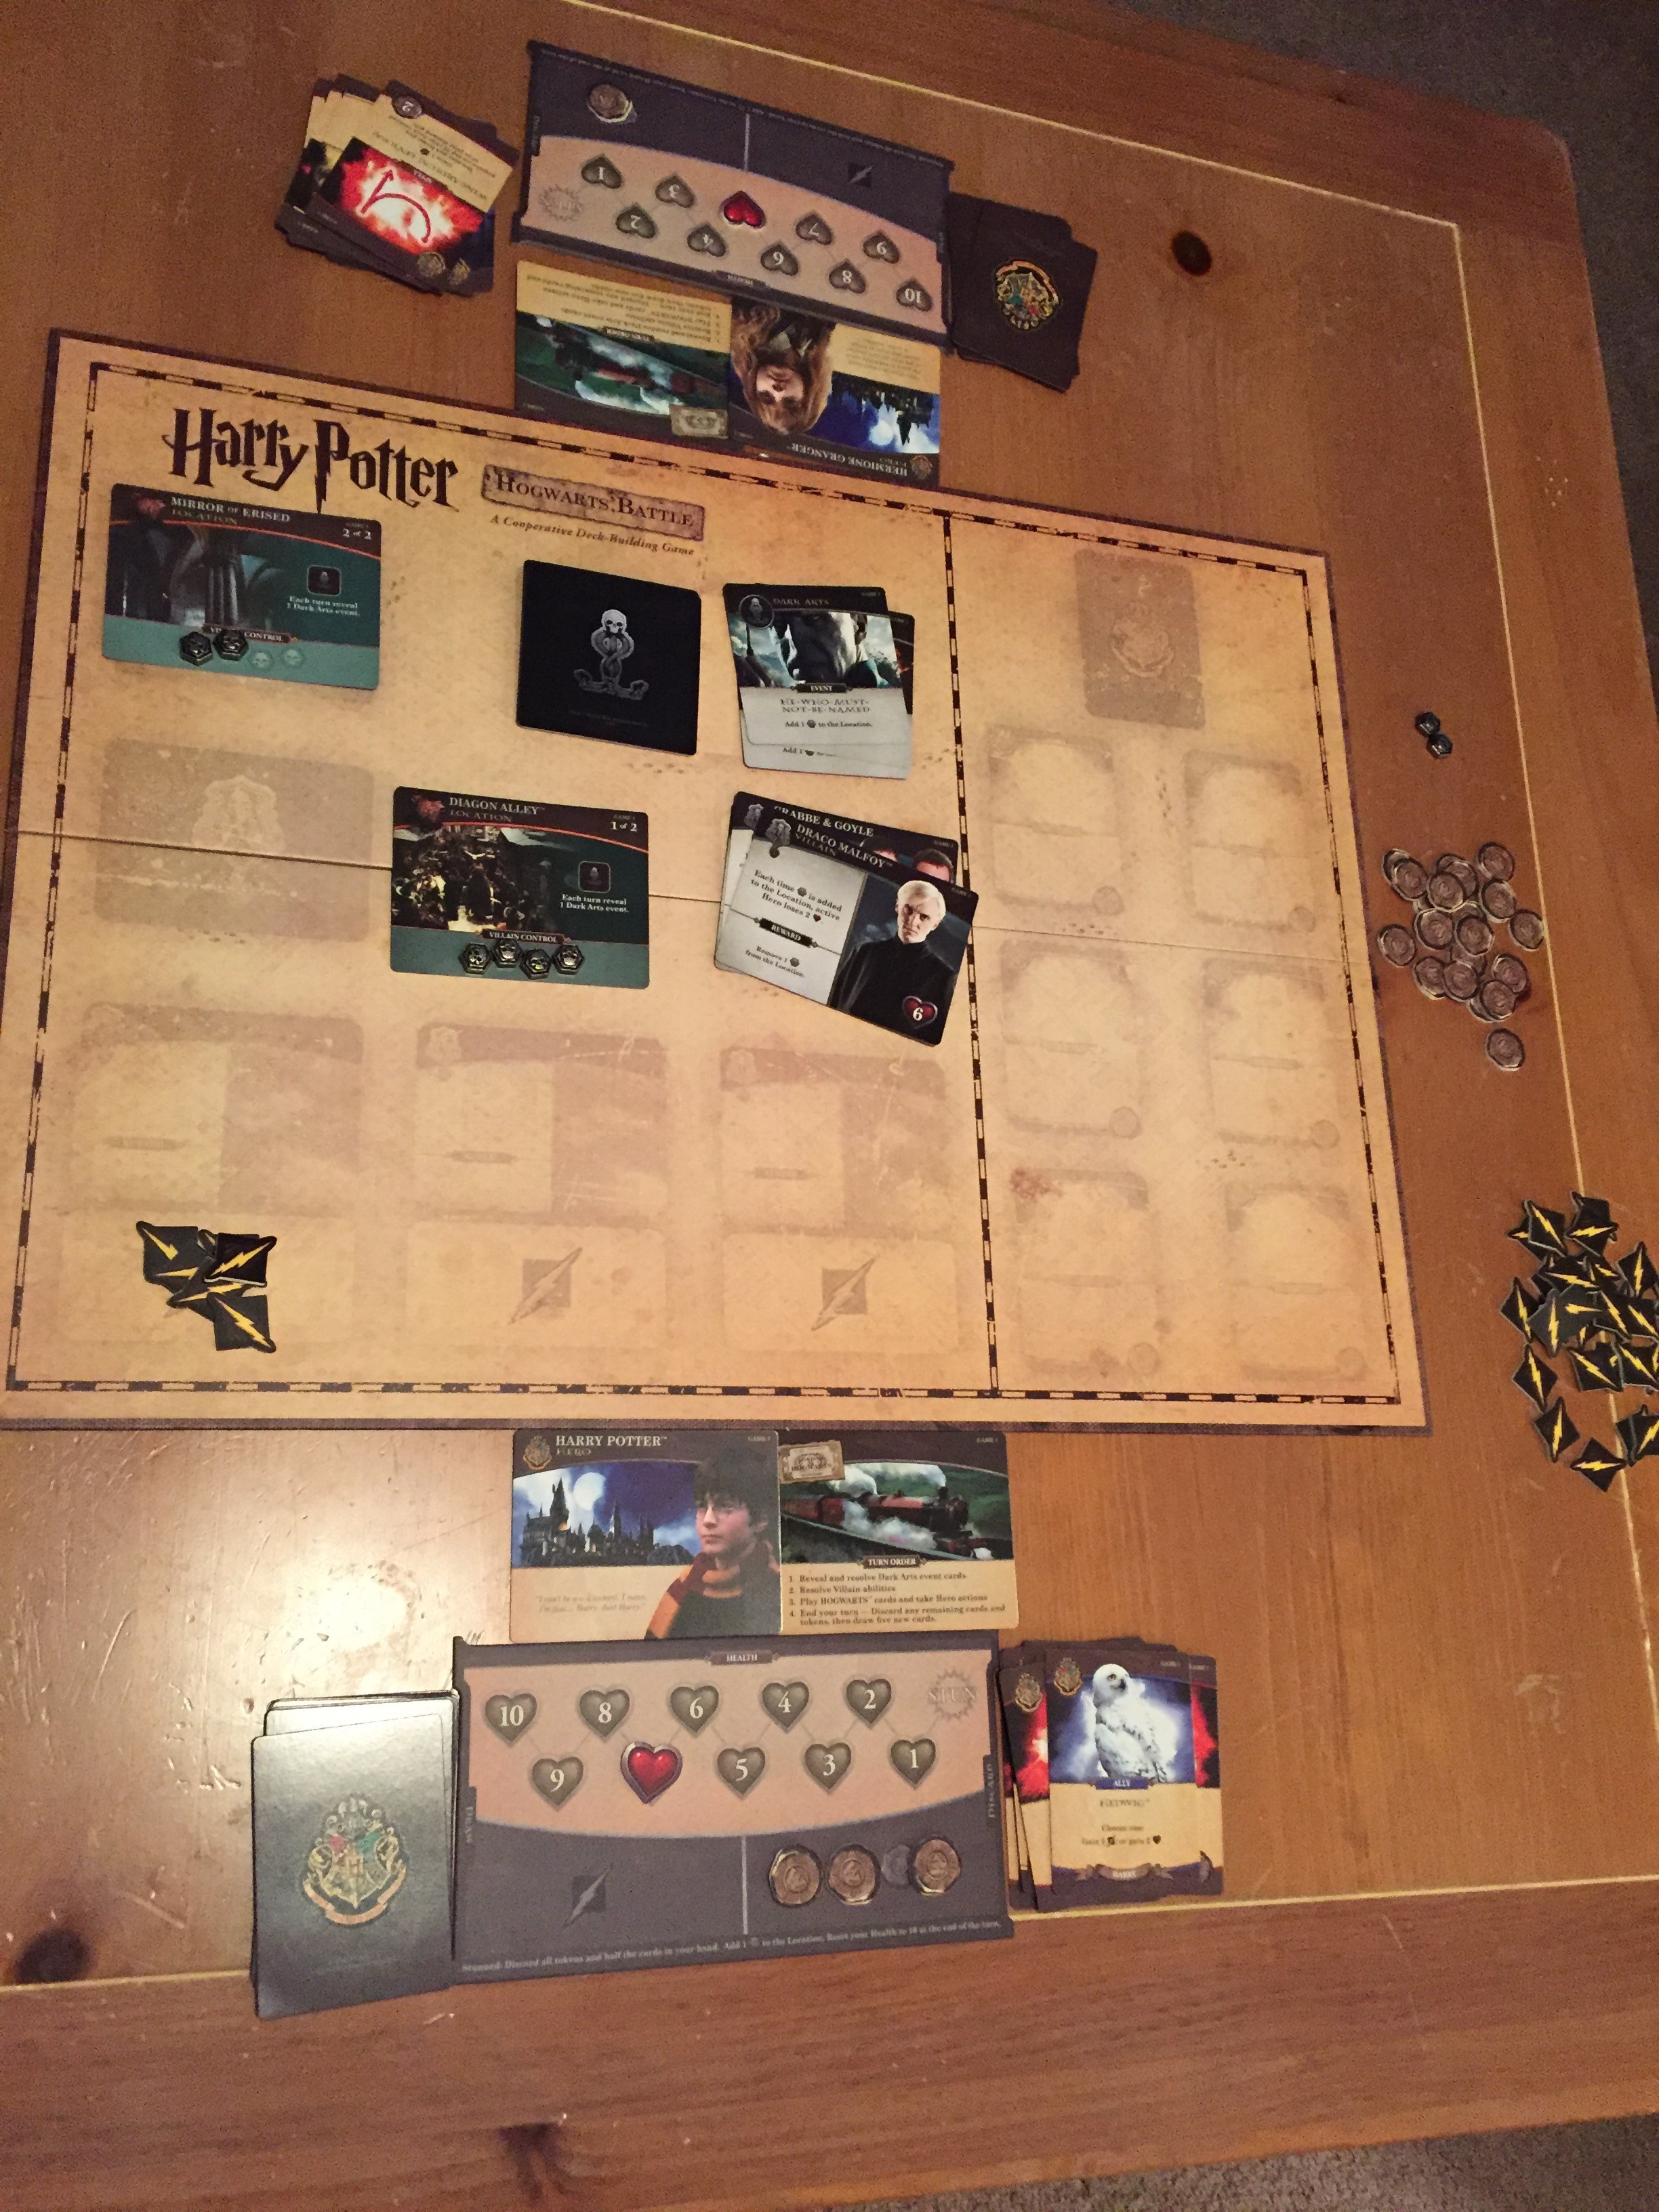 Harry Potter: Hogwarts Battle Board Game Review